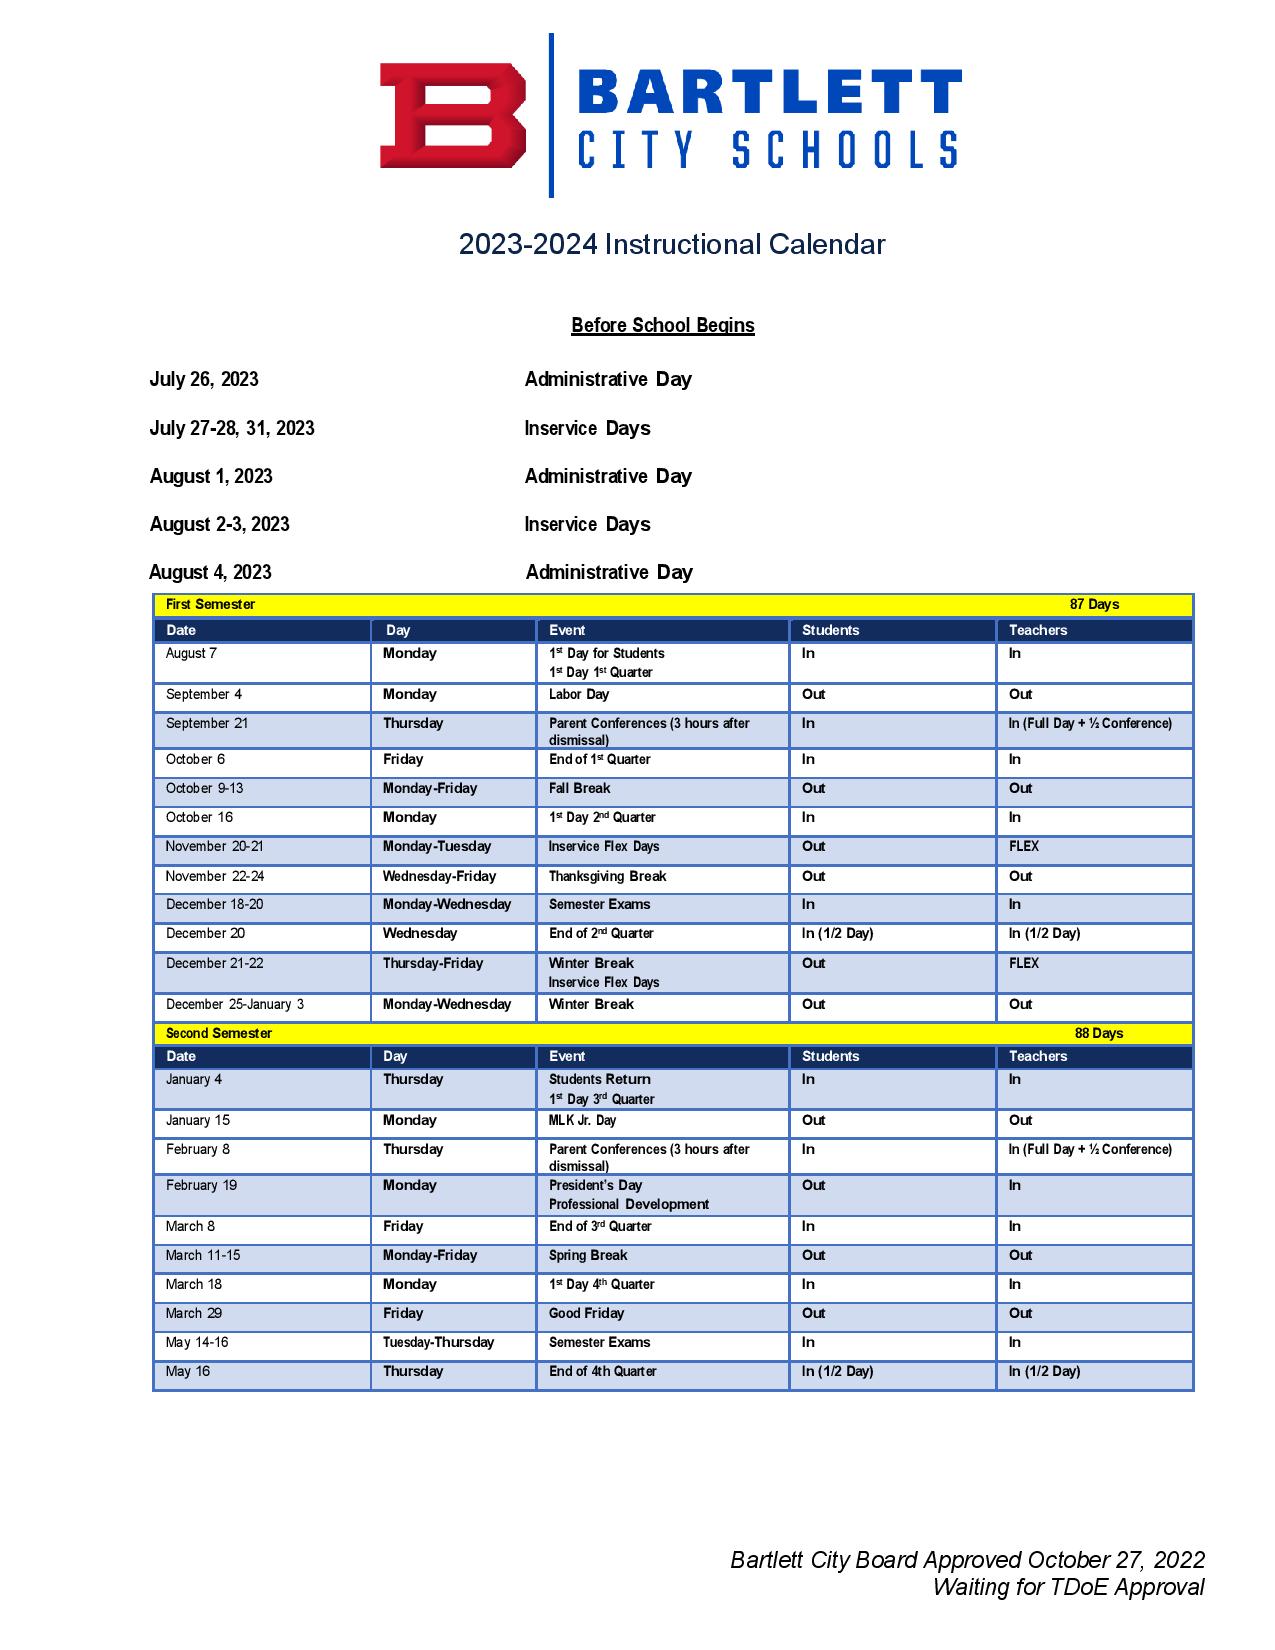 Bartlett City Schools Calendar 20232024 in PDF